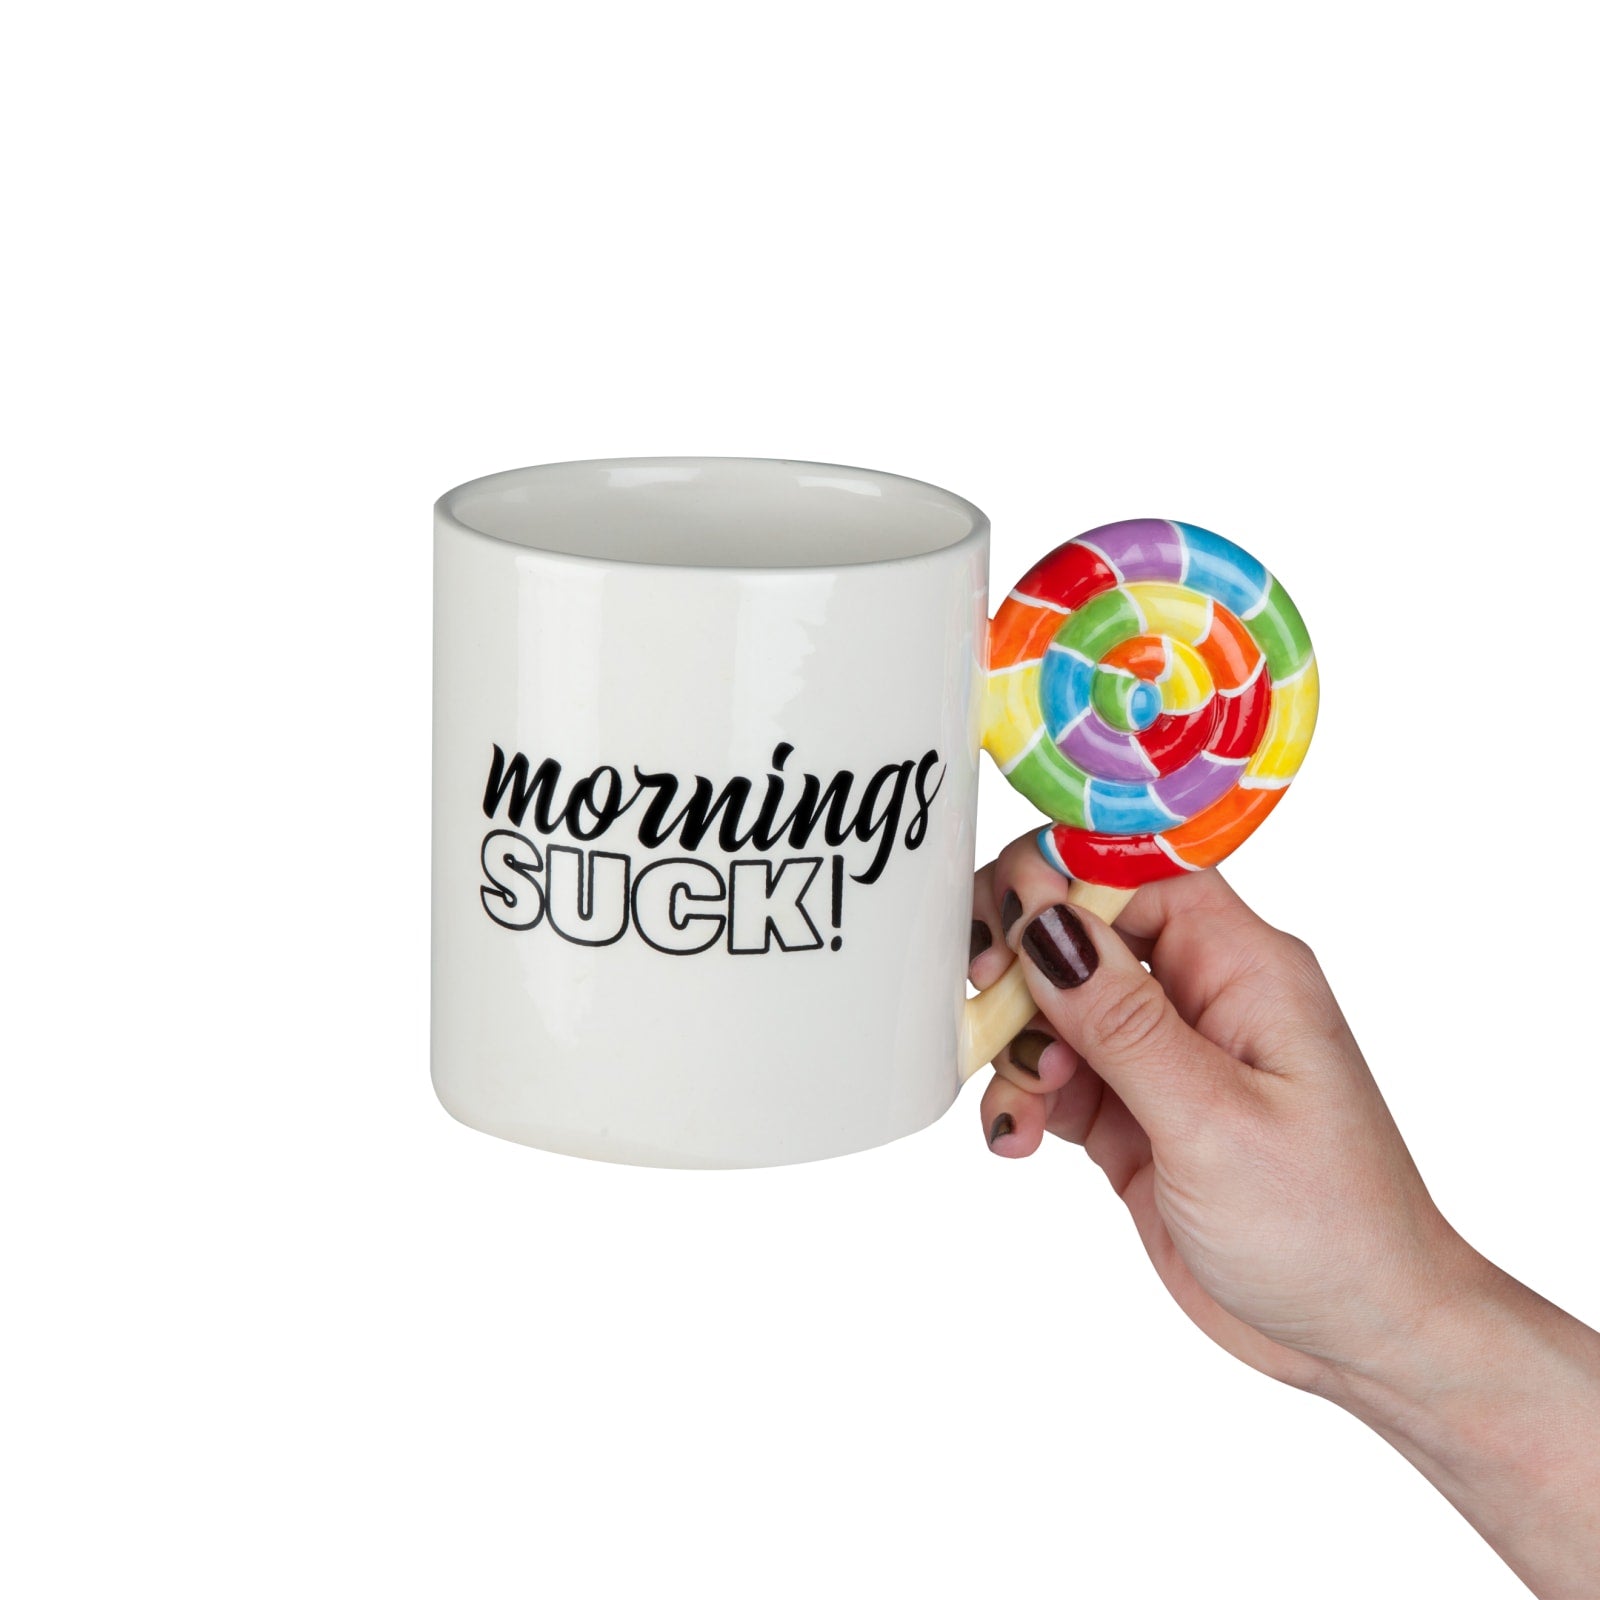 The Mornings Suck Coffee Mug